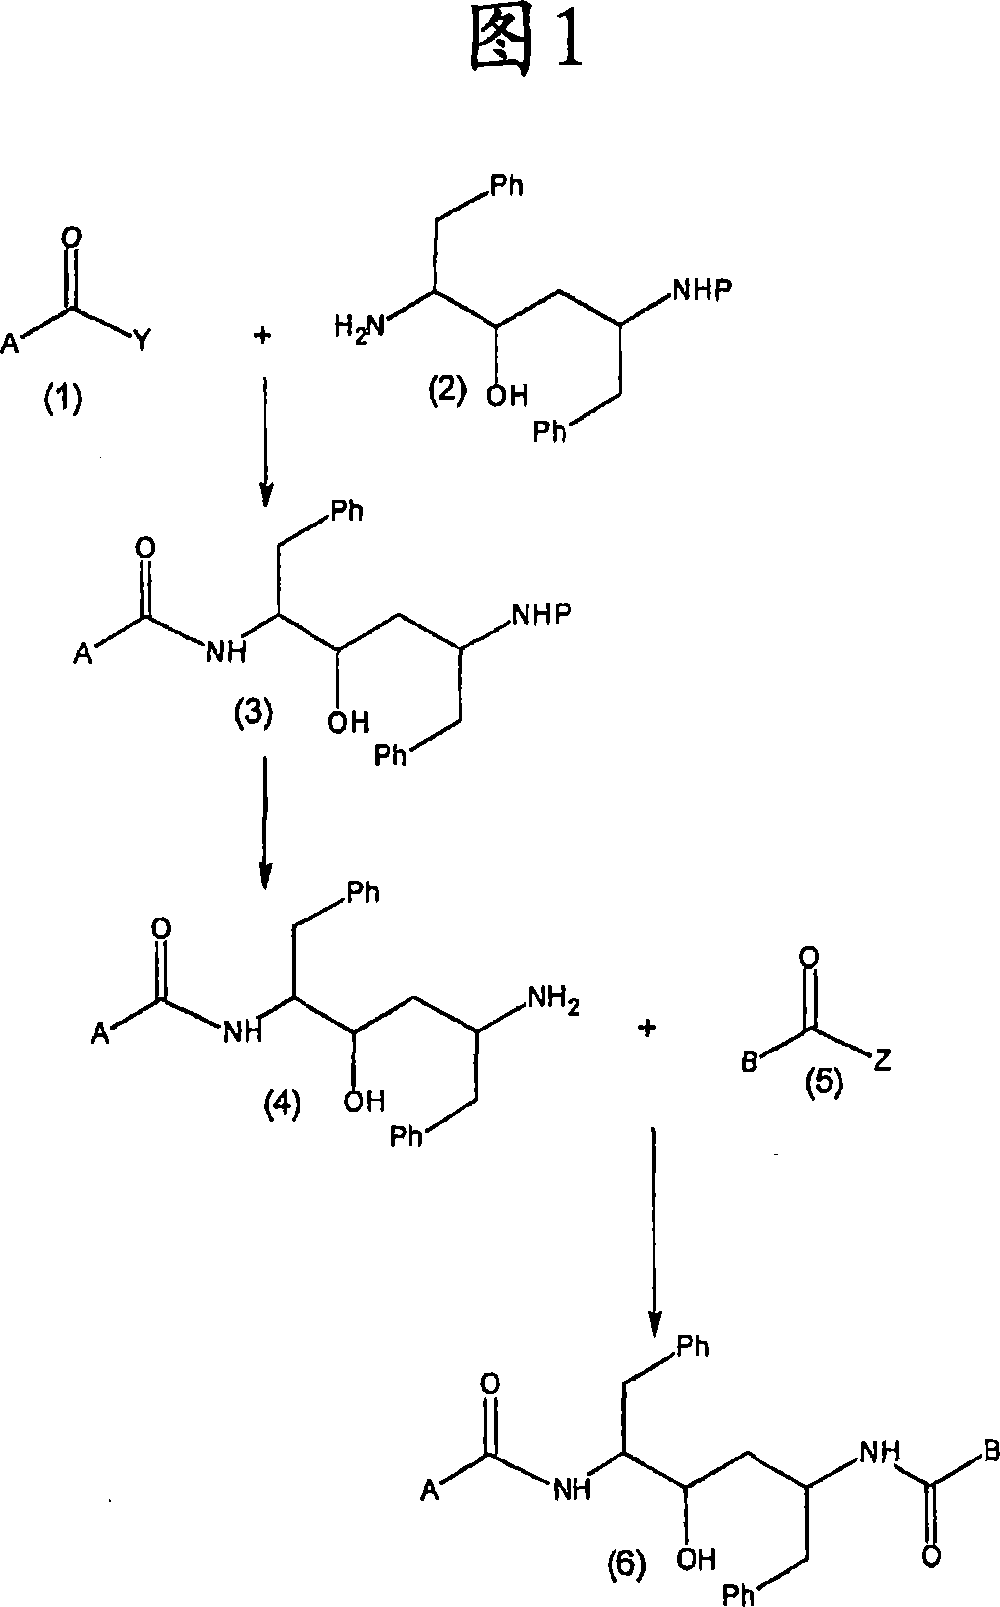 Ritonavir analogous compound useful as retroviral protease inhibitor, preparation of the ritonavir analogous compound and pharmaceutical composition for the ritonavir analogous compound.